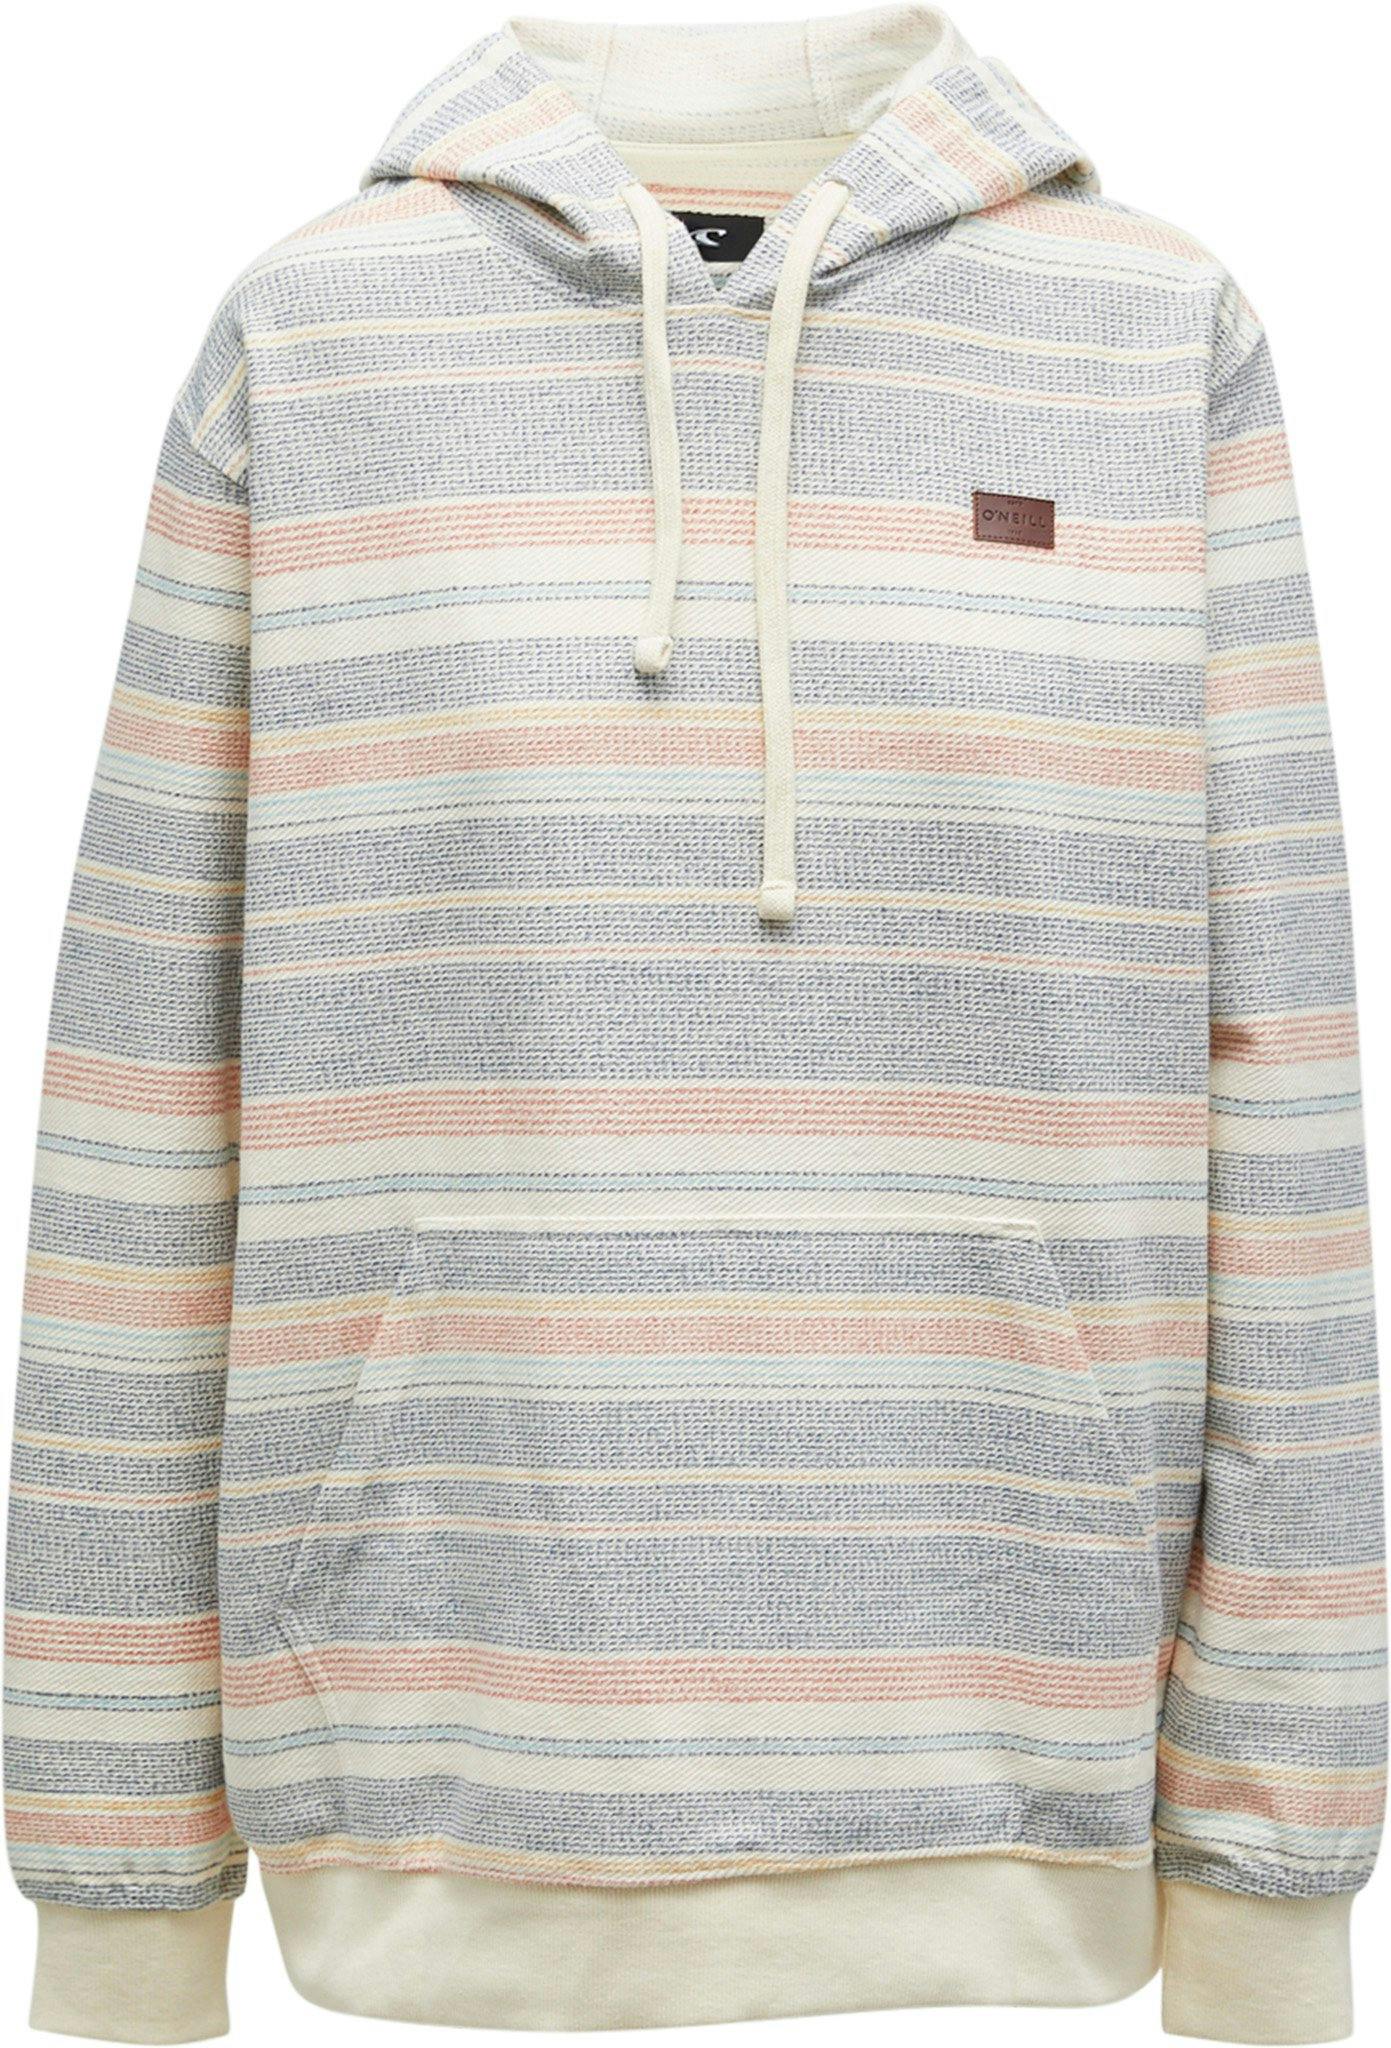 Product image for Bavaro Stripe Pullover - Men's